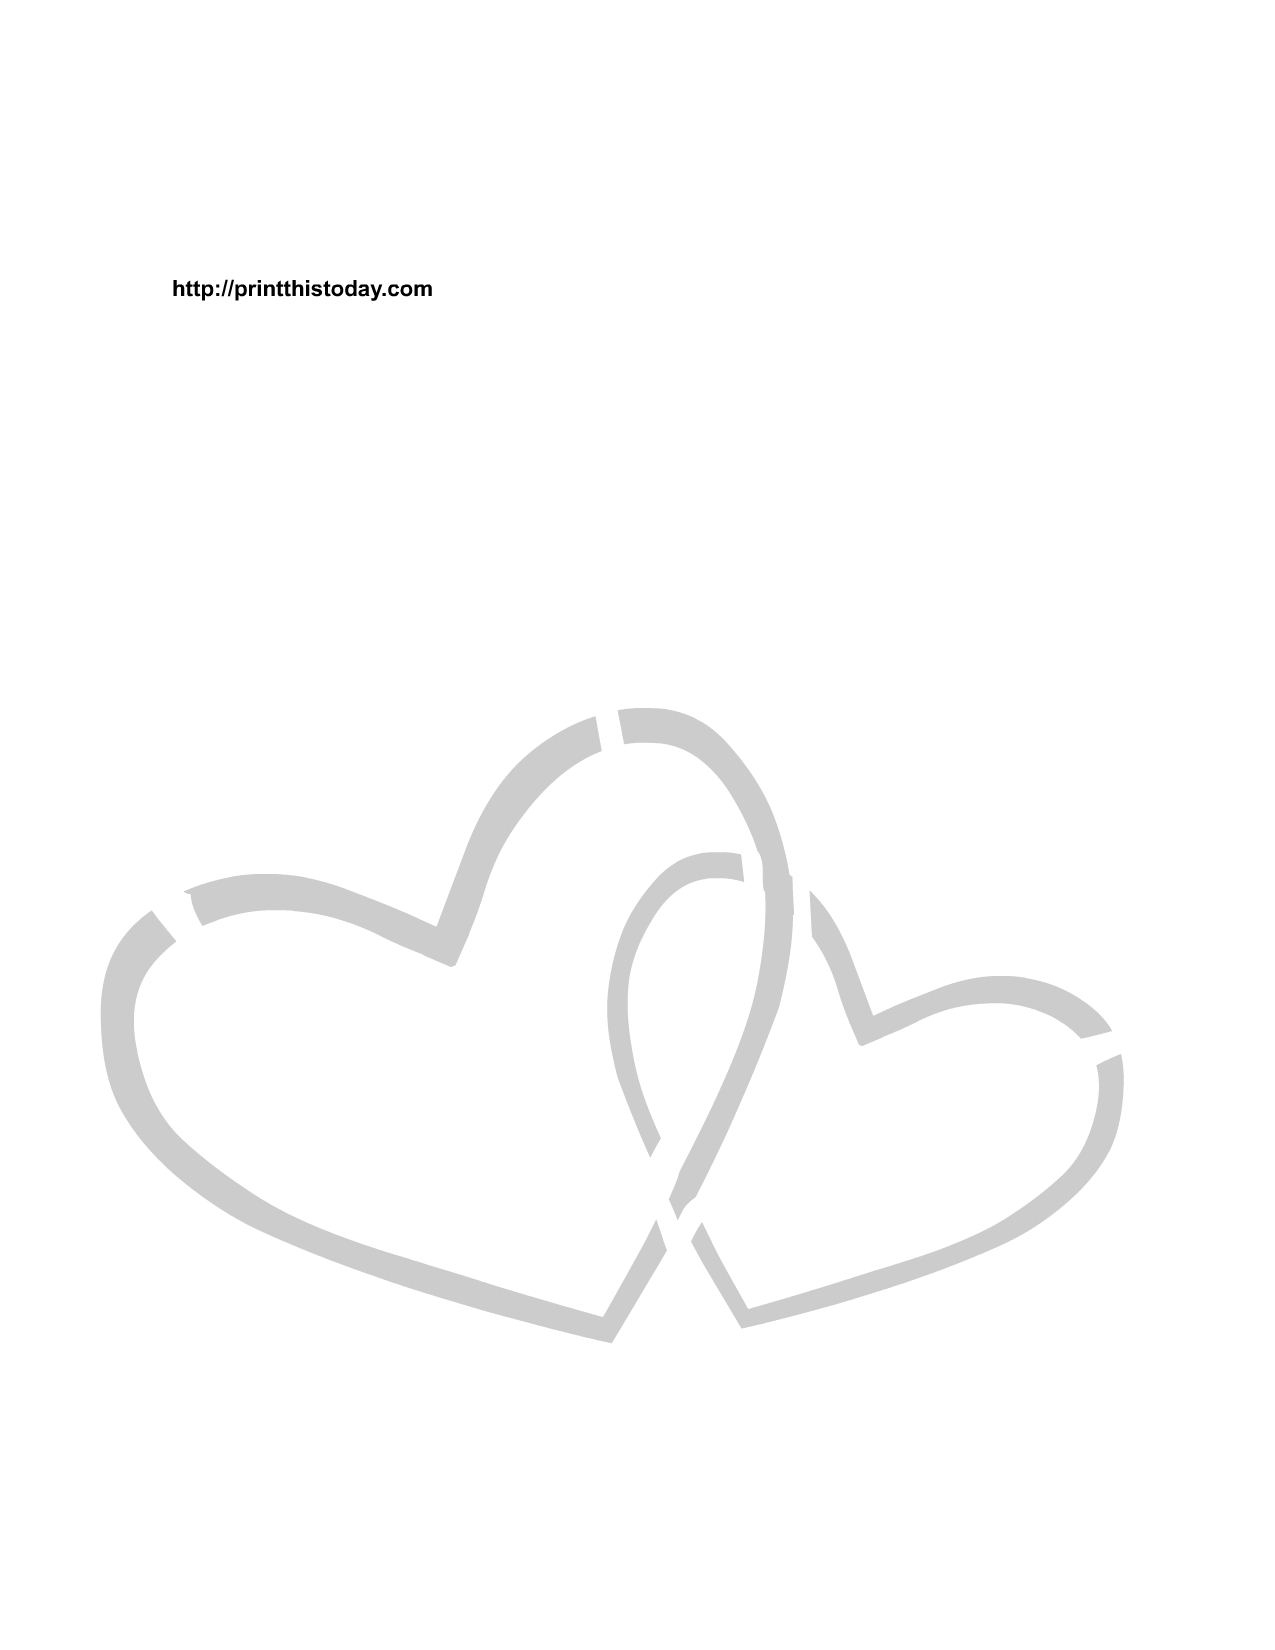 Free Printable Hearts Stencils - Free Printable Hearts